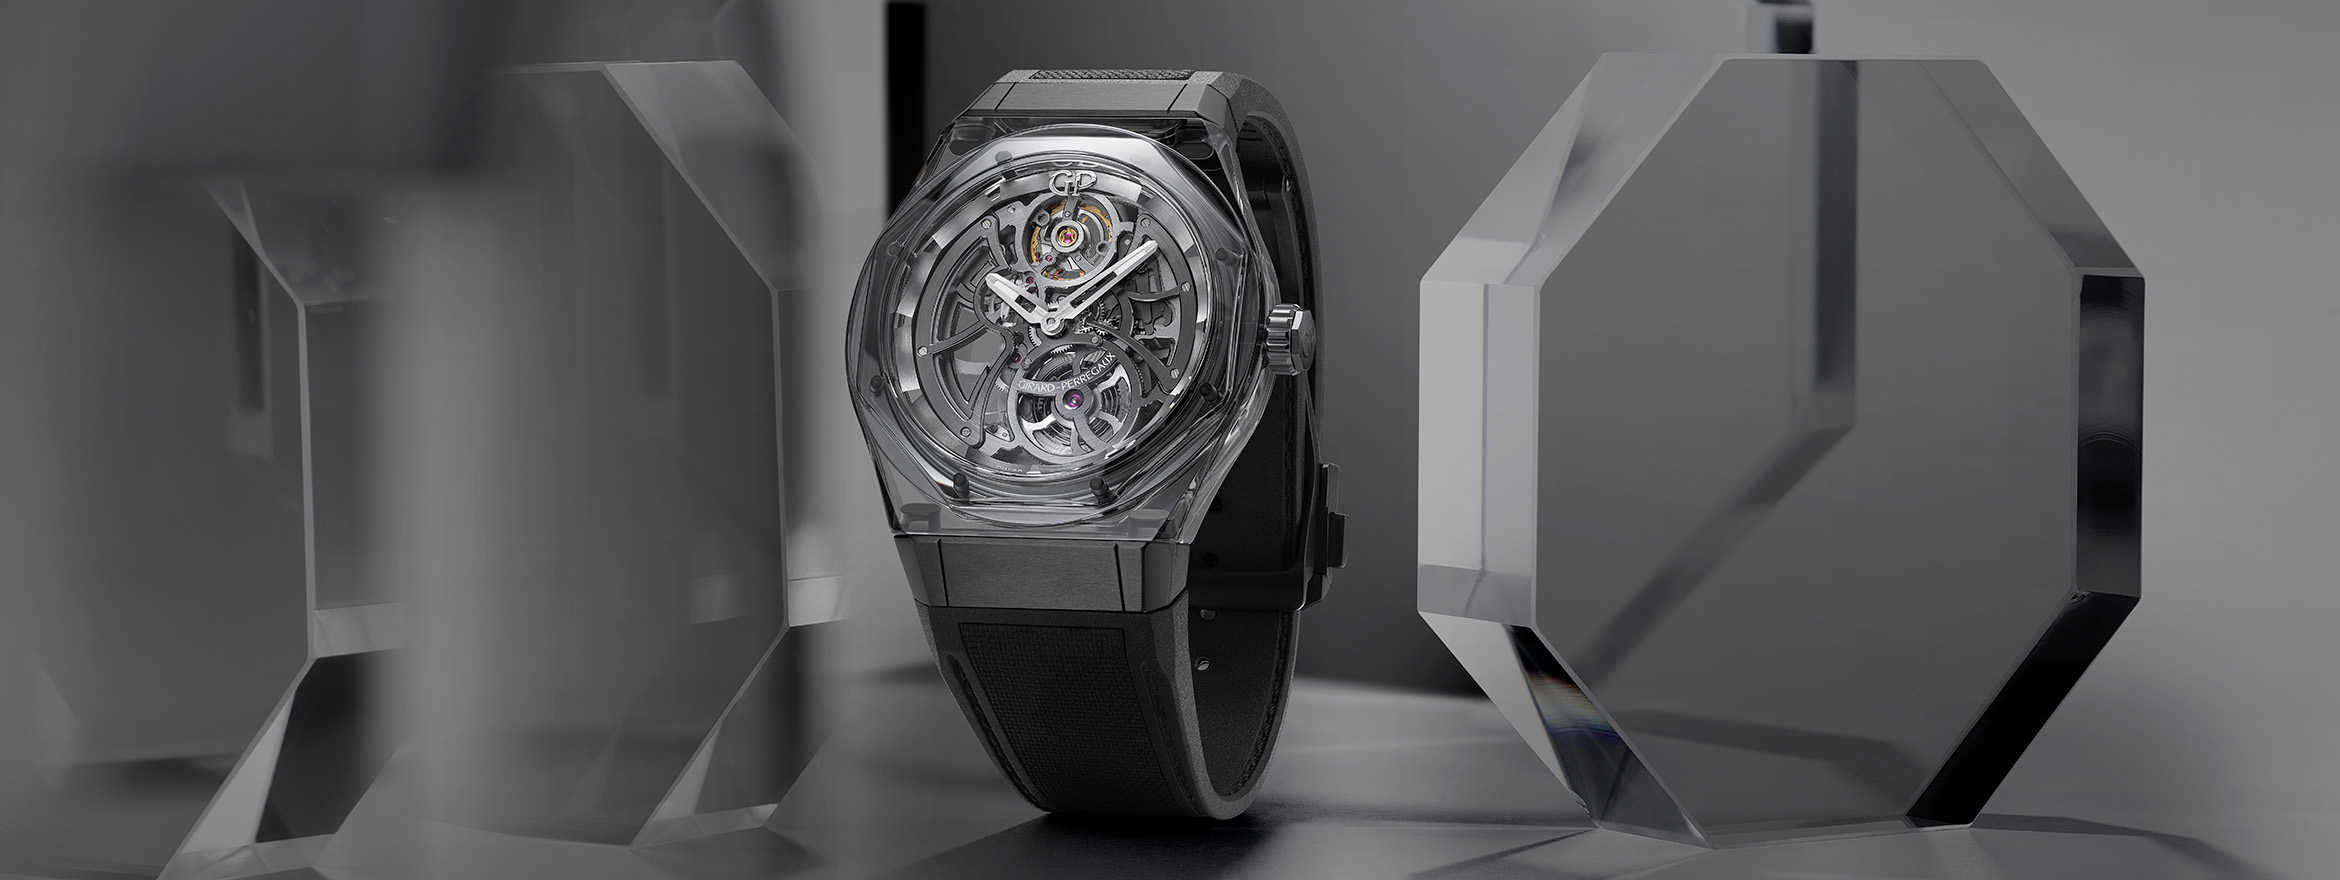 Girard-Perregaux เปิดตัวนาฬิกา Laureato Absolute Light & Shade ที่แสนโดดเด่น